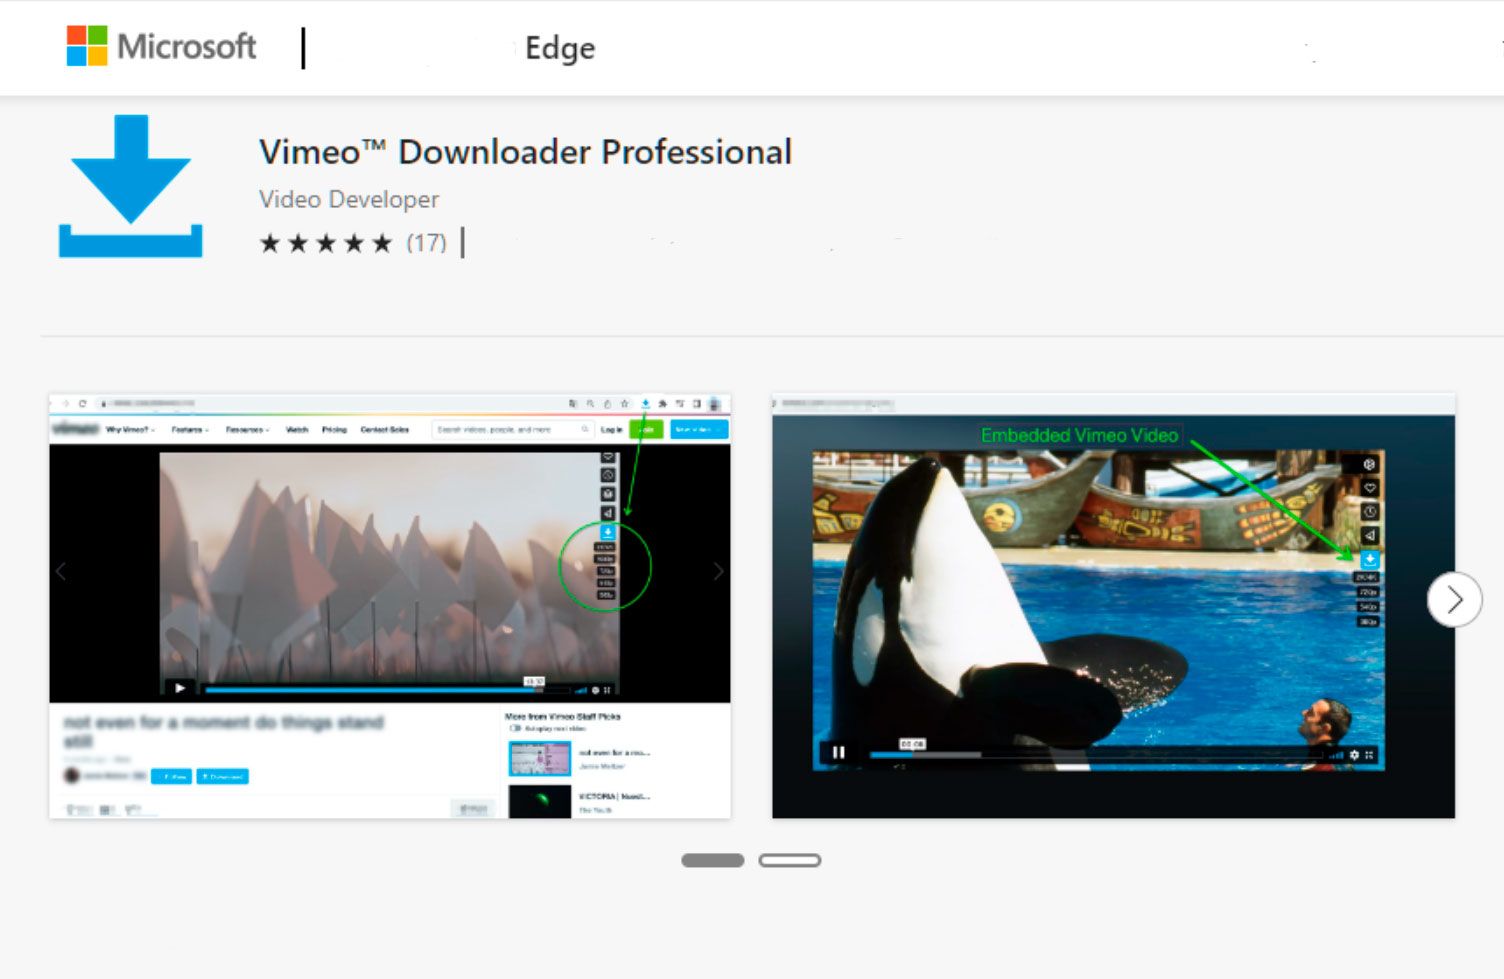 Vimeo™ Downloader Professional..